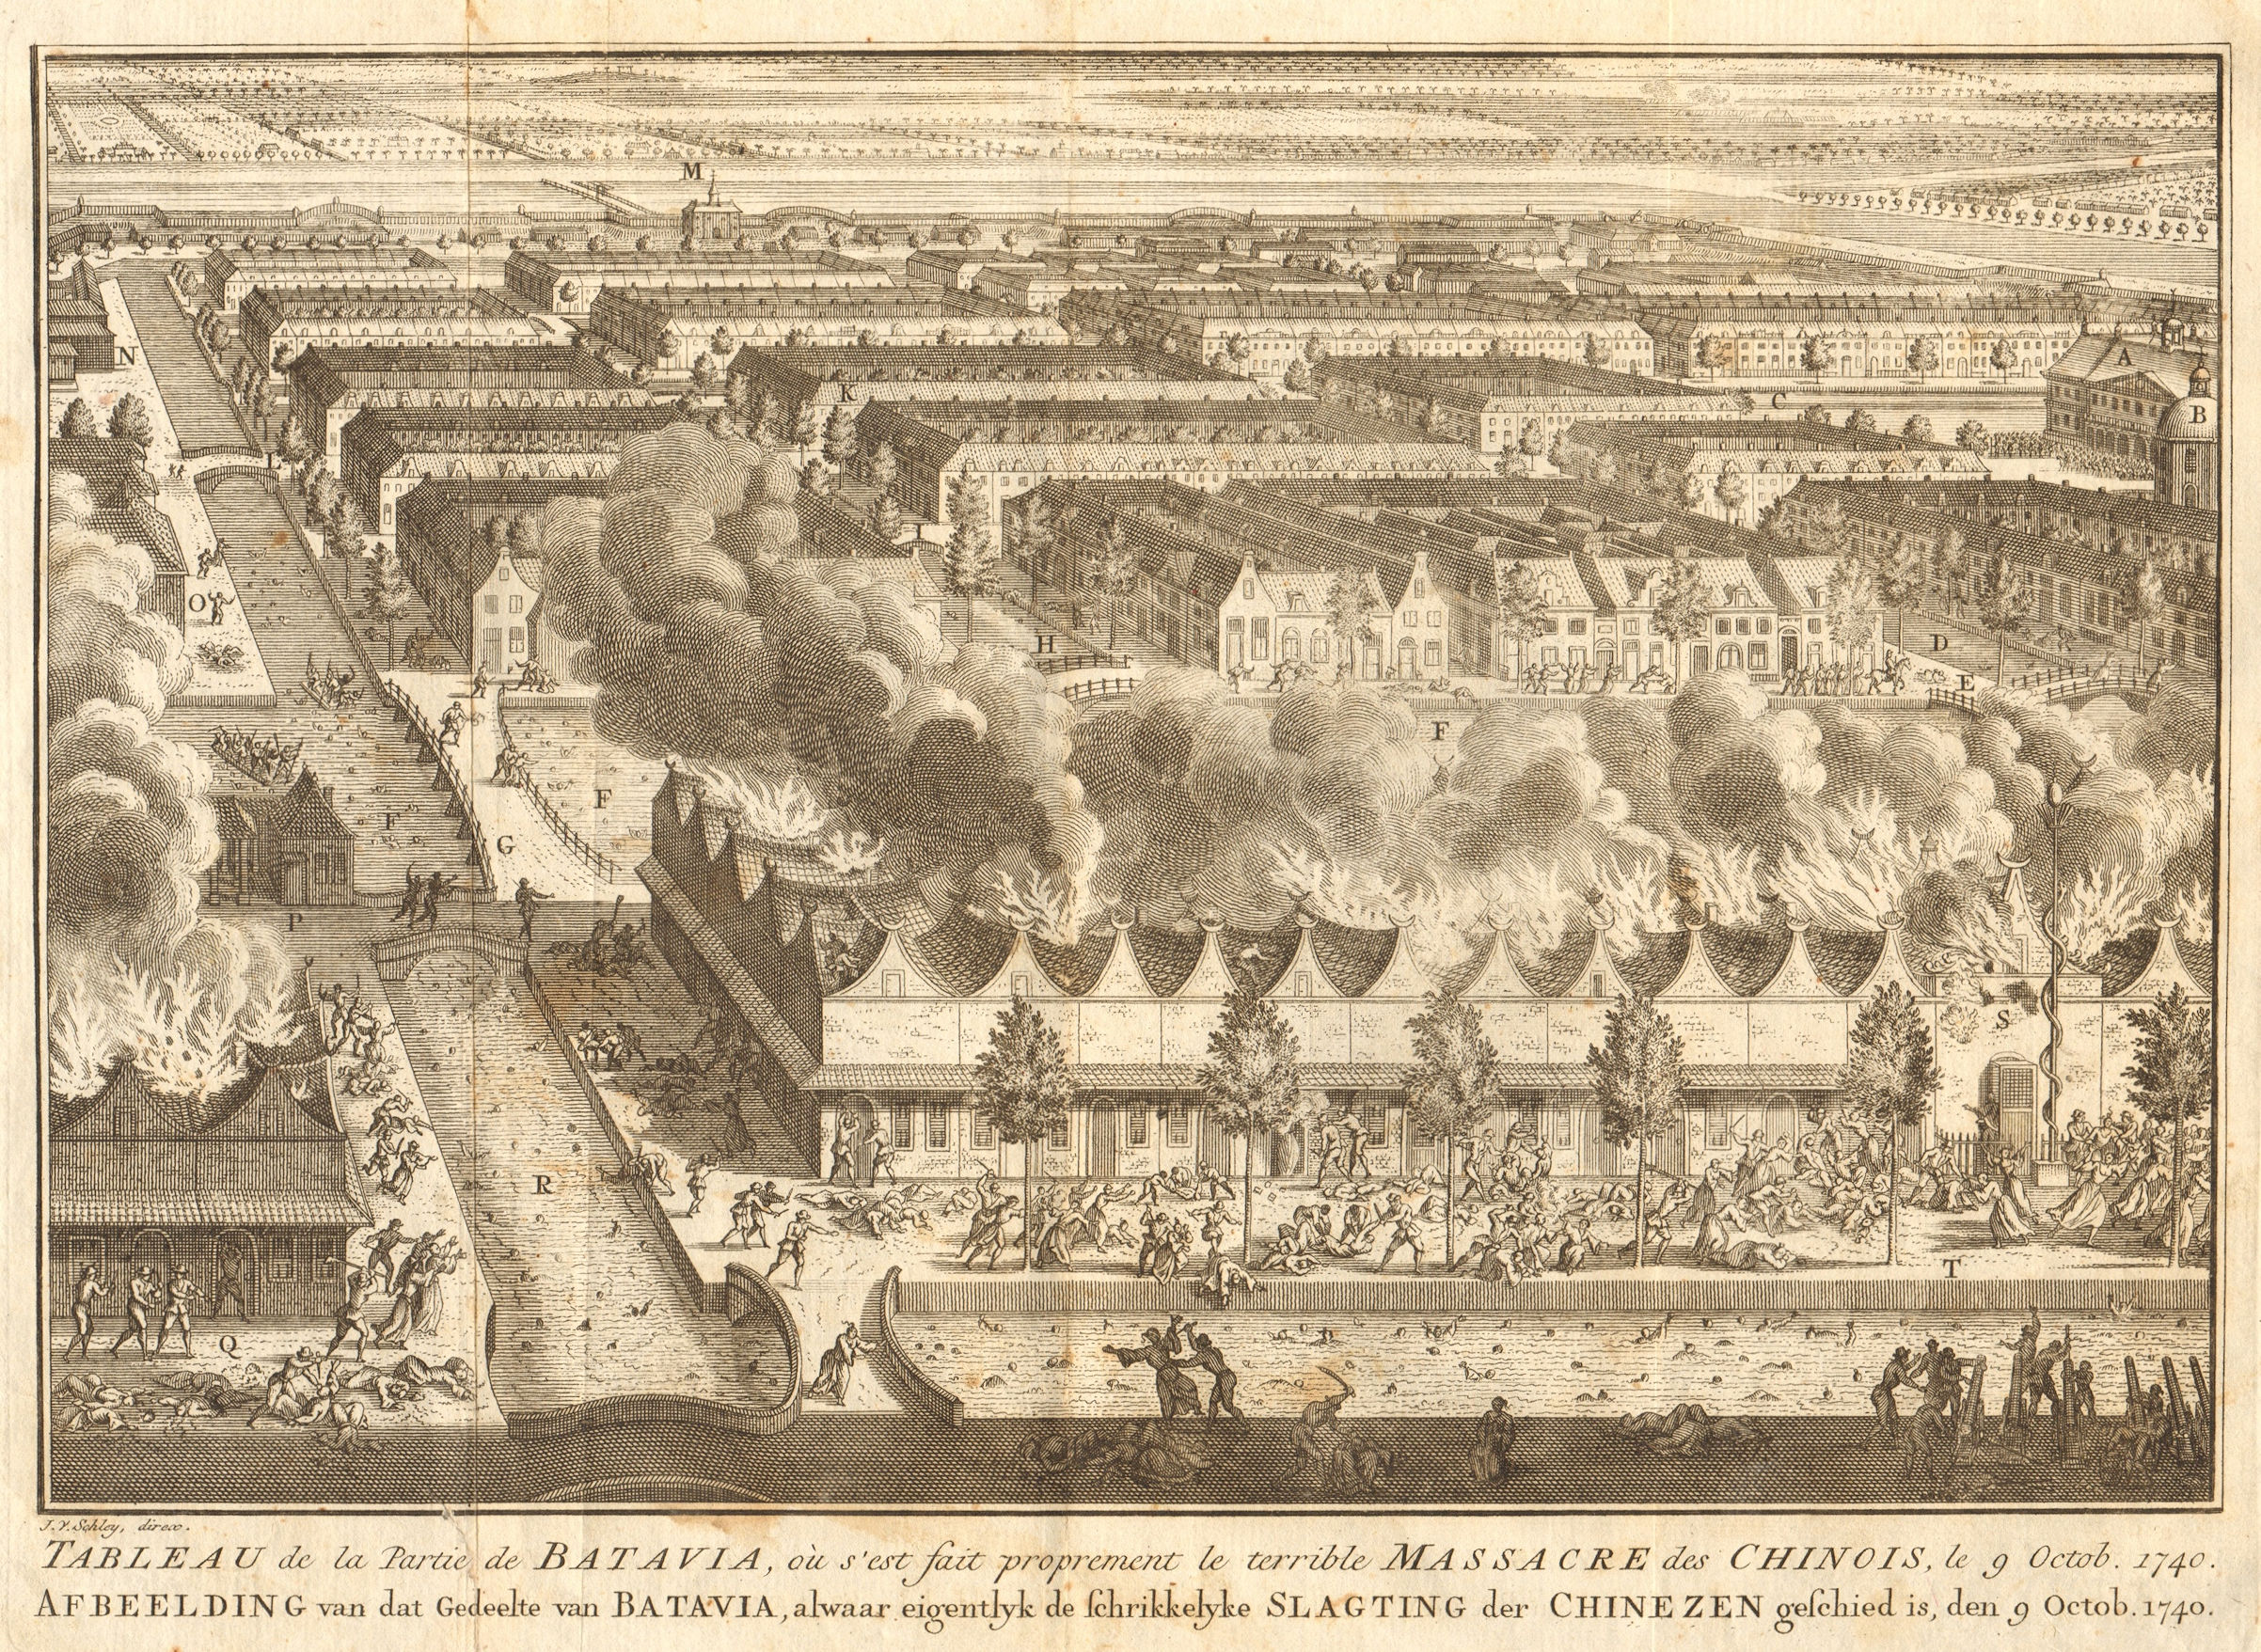 1740 Batavia pogrom. Massacre of Chinese. Jakarta Dutch East Indies. SCHLEY 1763